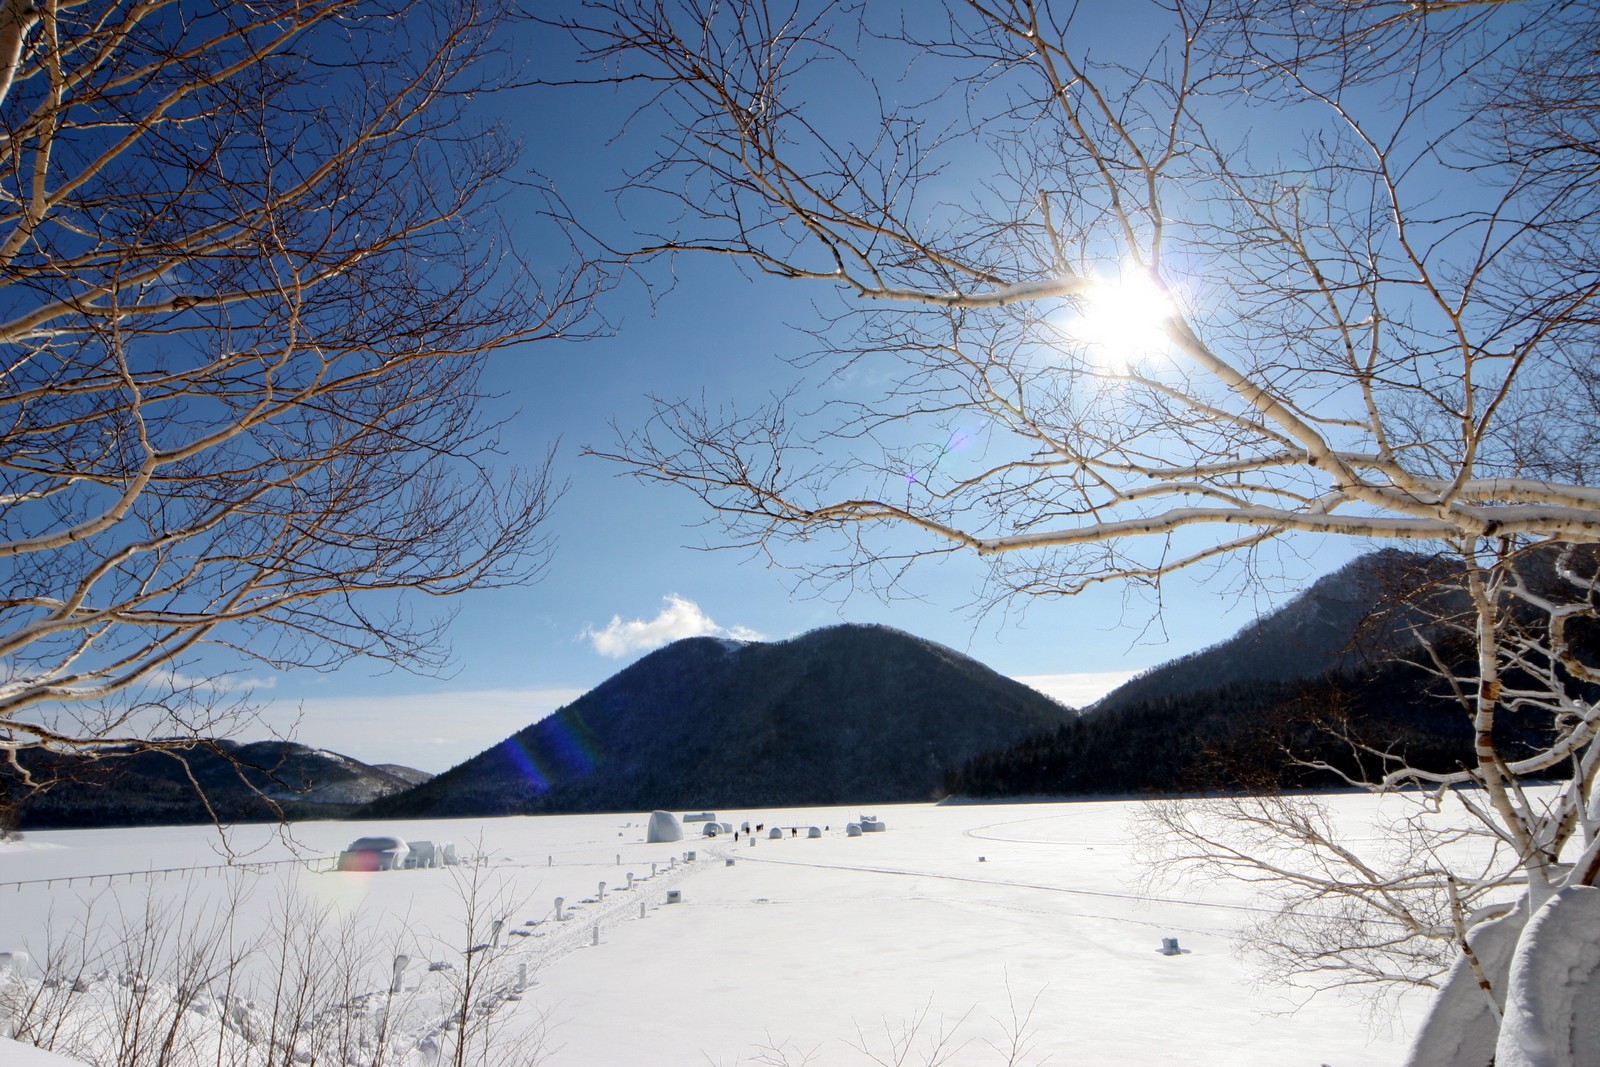 The ice village of Lake Shikaribetsu in Hokkaido